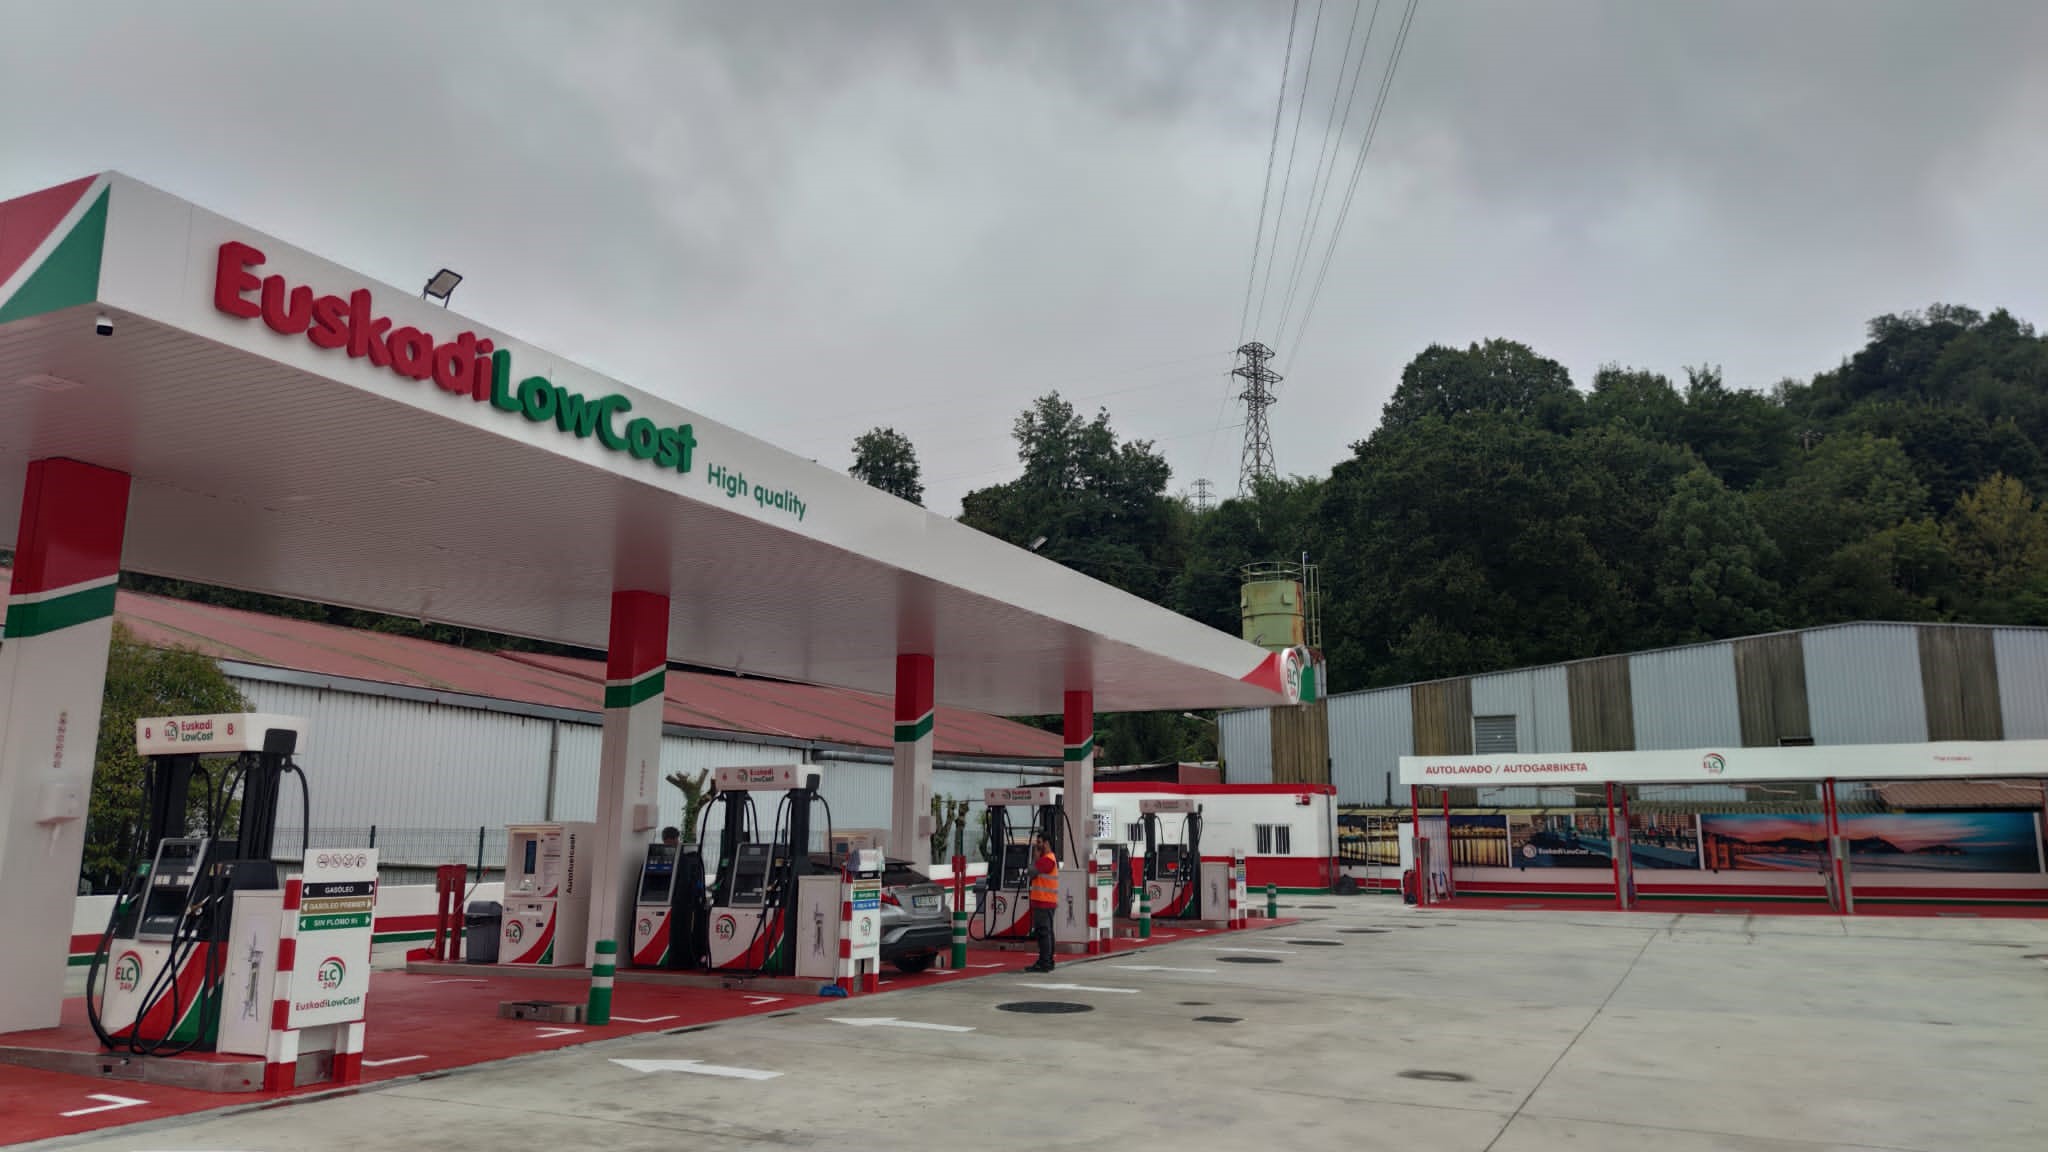 gasolinera_low_cost_donostia1